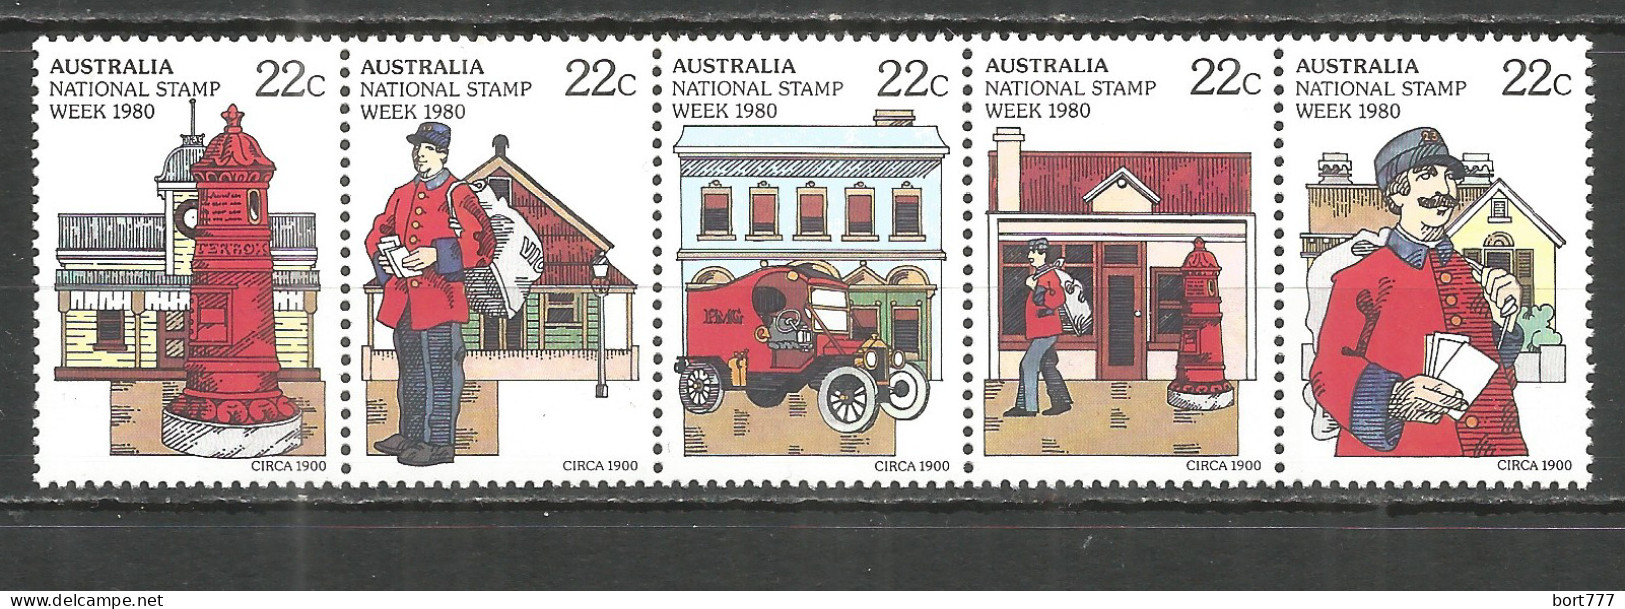 Australia 1980 Year, Mint Stamps MNH(**) Set - Mint Stamps